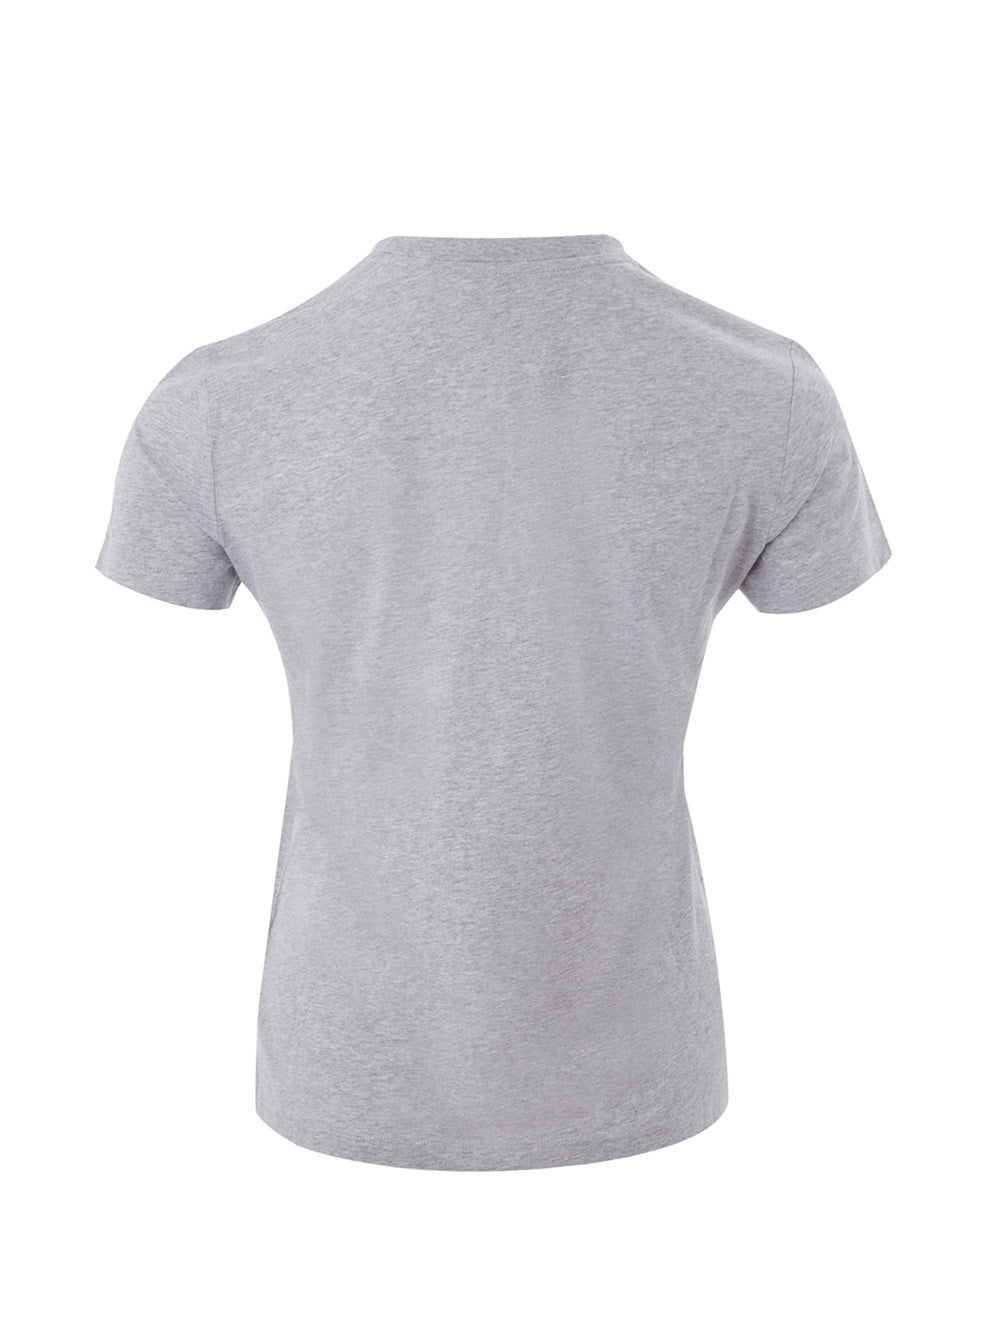 Gray Cotton T-Shirt with Kenzo Print